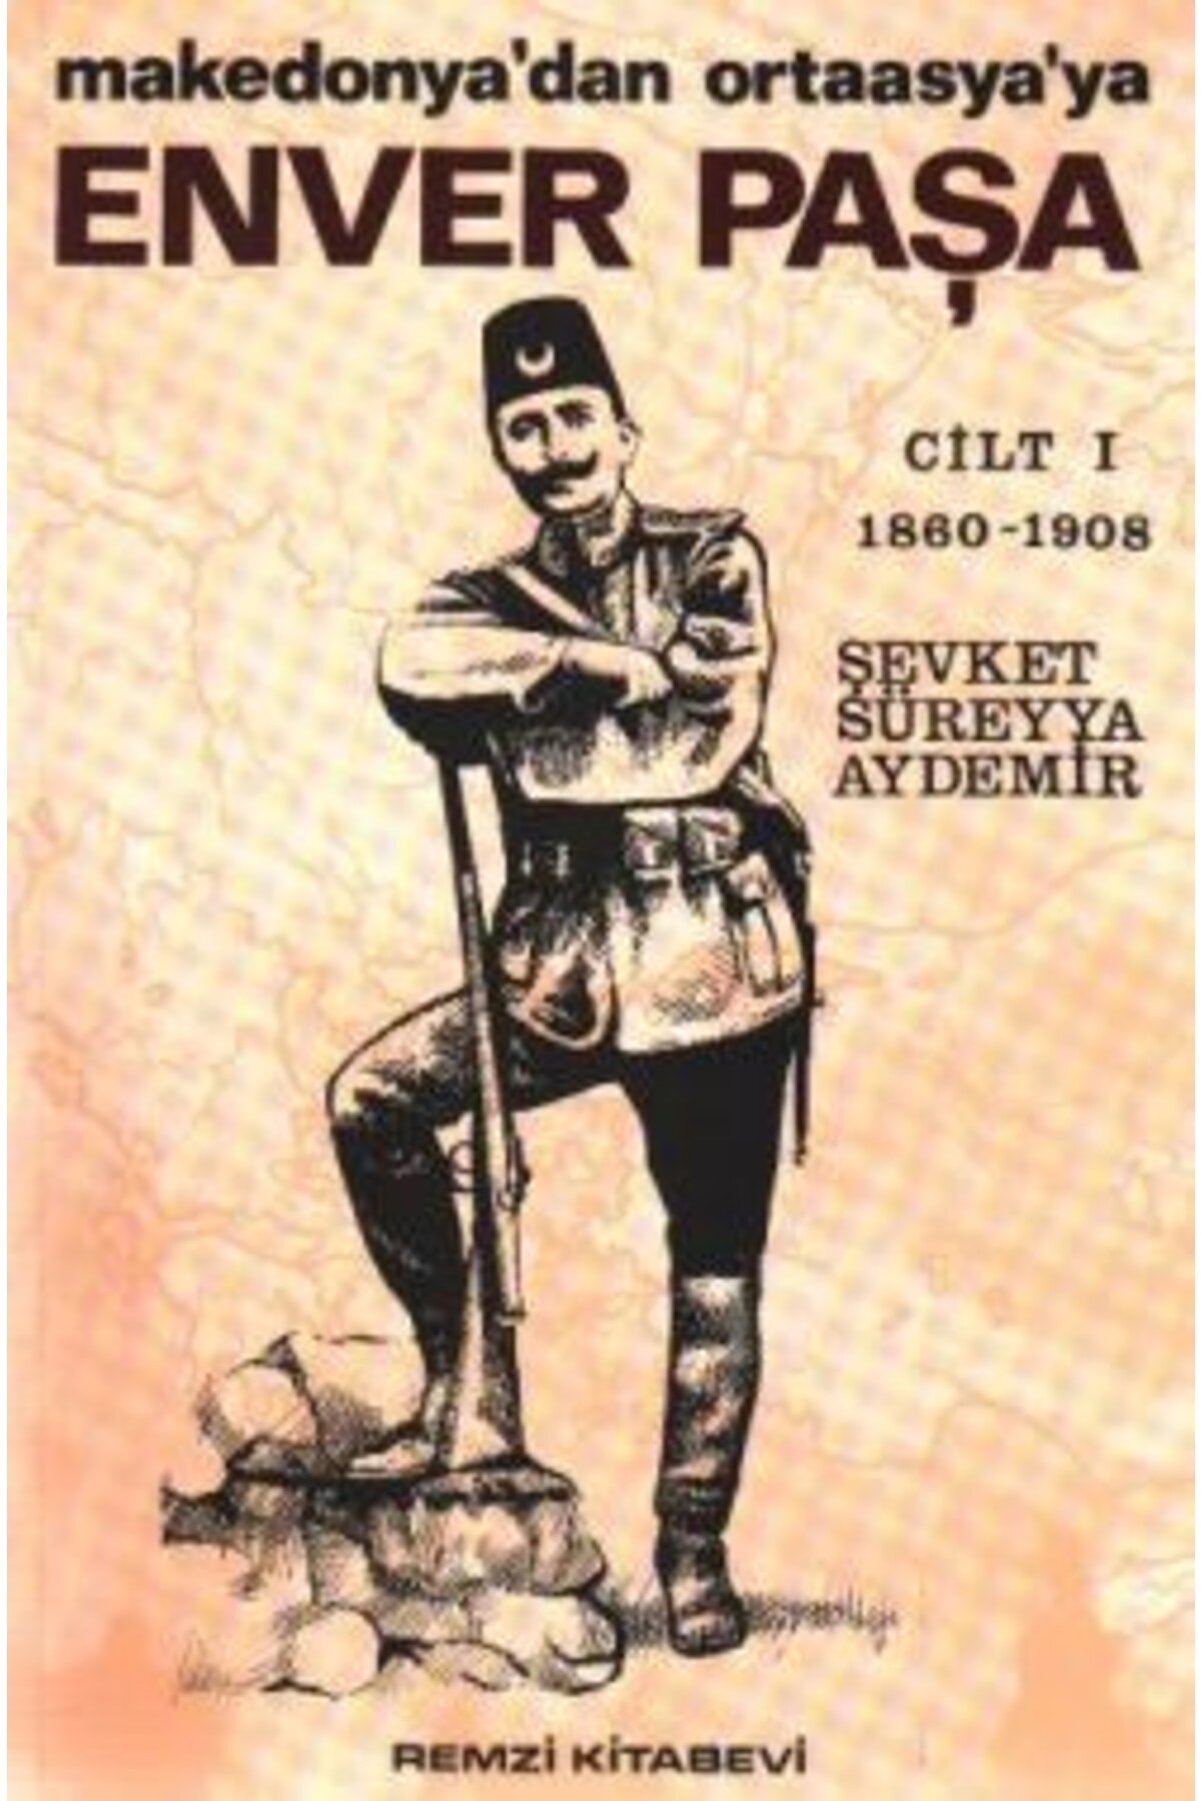 Remzi Kitabevi Enver Paşa Cilt: 1 1860-1908 Makedonya’dan Ortaasya’ya